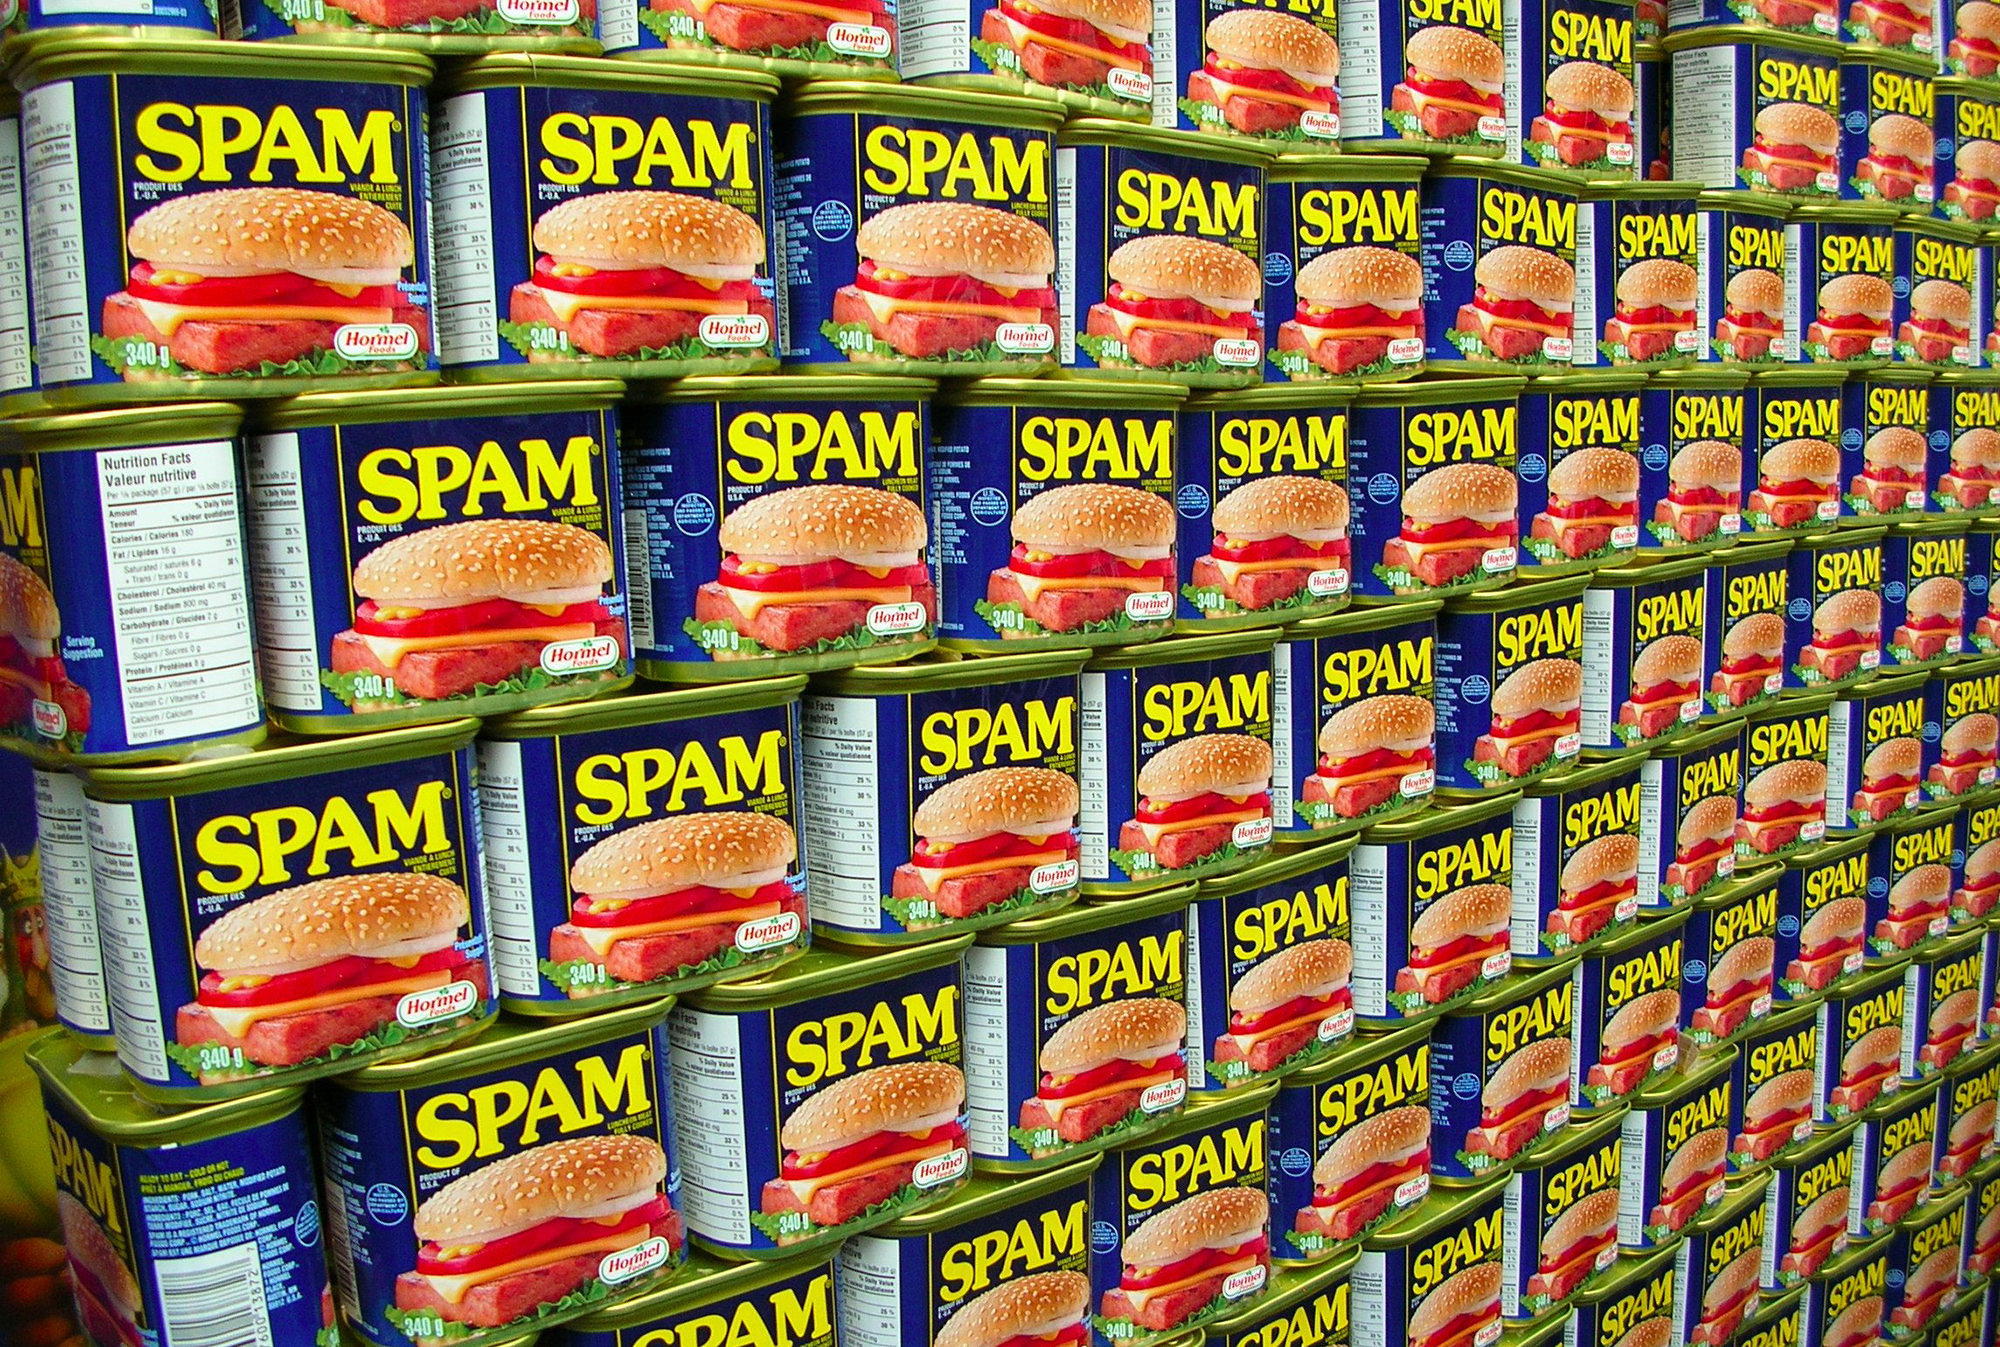 When is spam not spam?